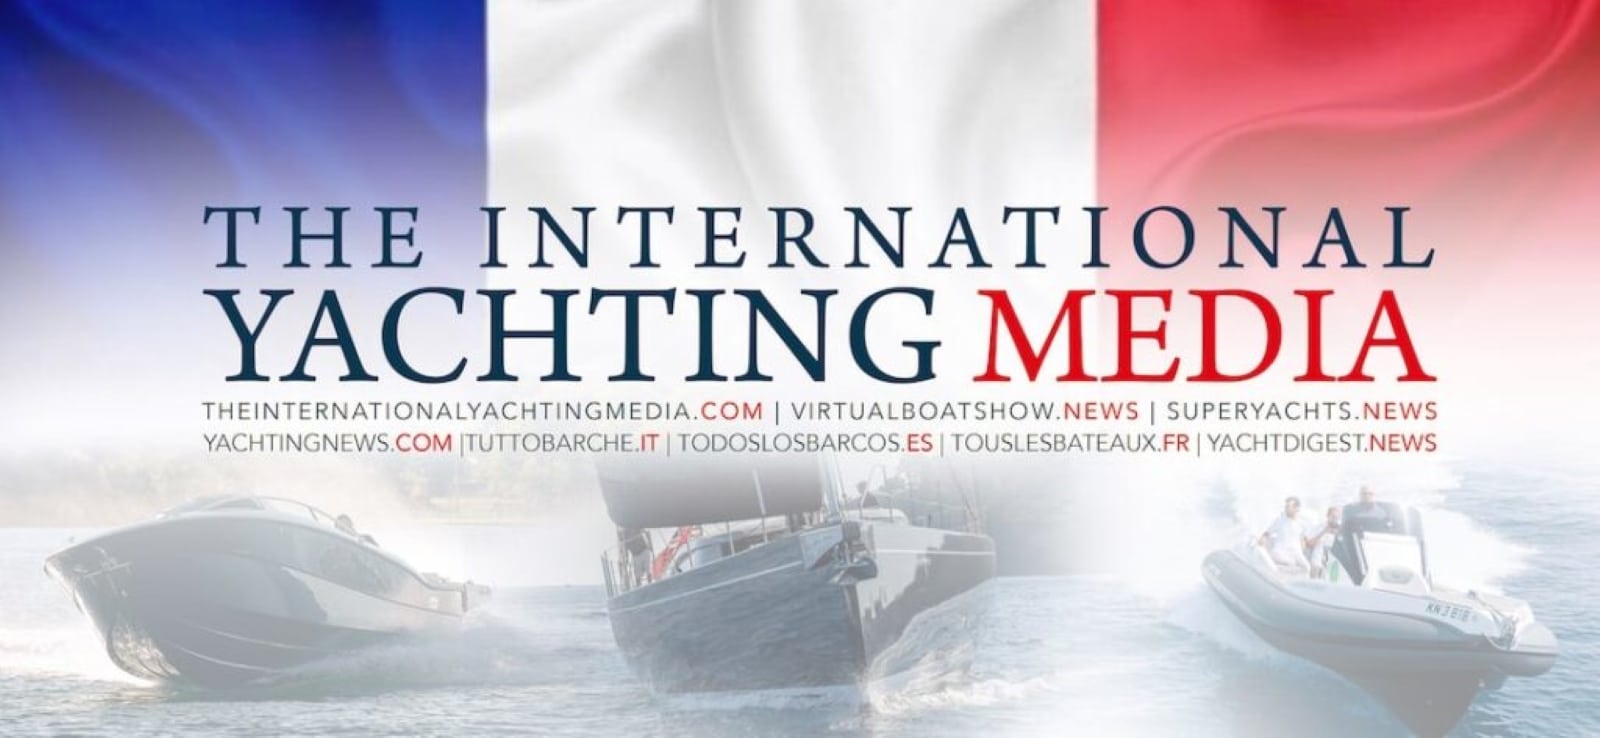 The-International-Yachting-Media-France-Béréngere-Denis